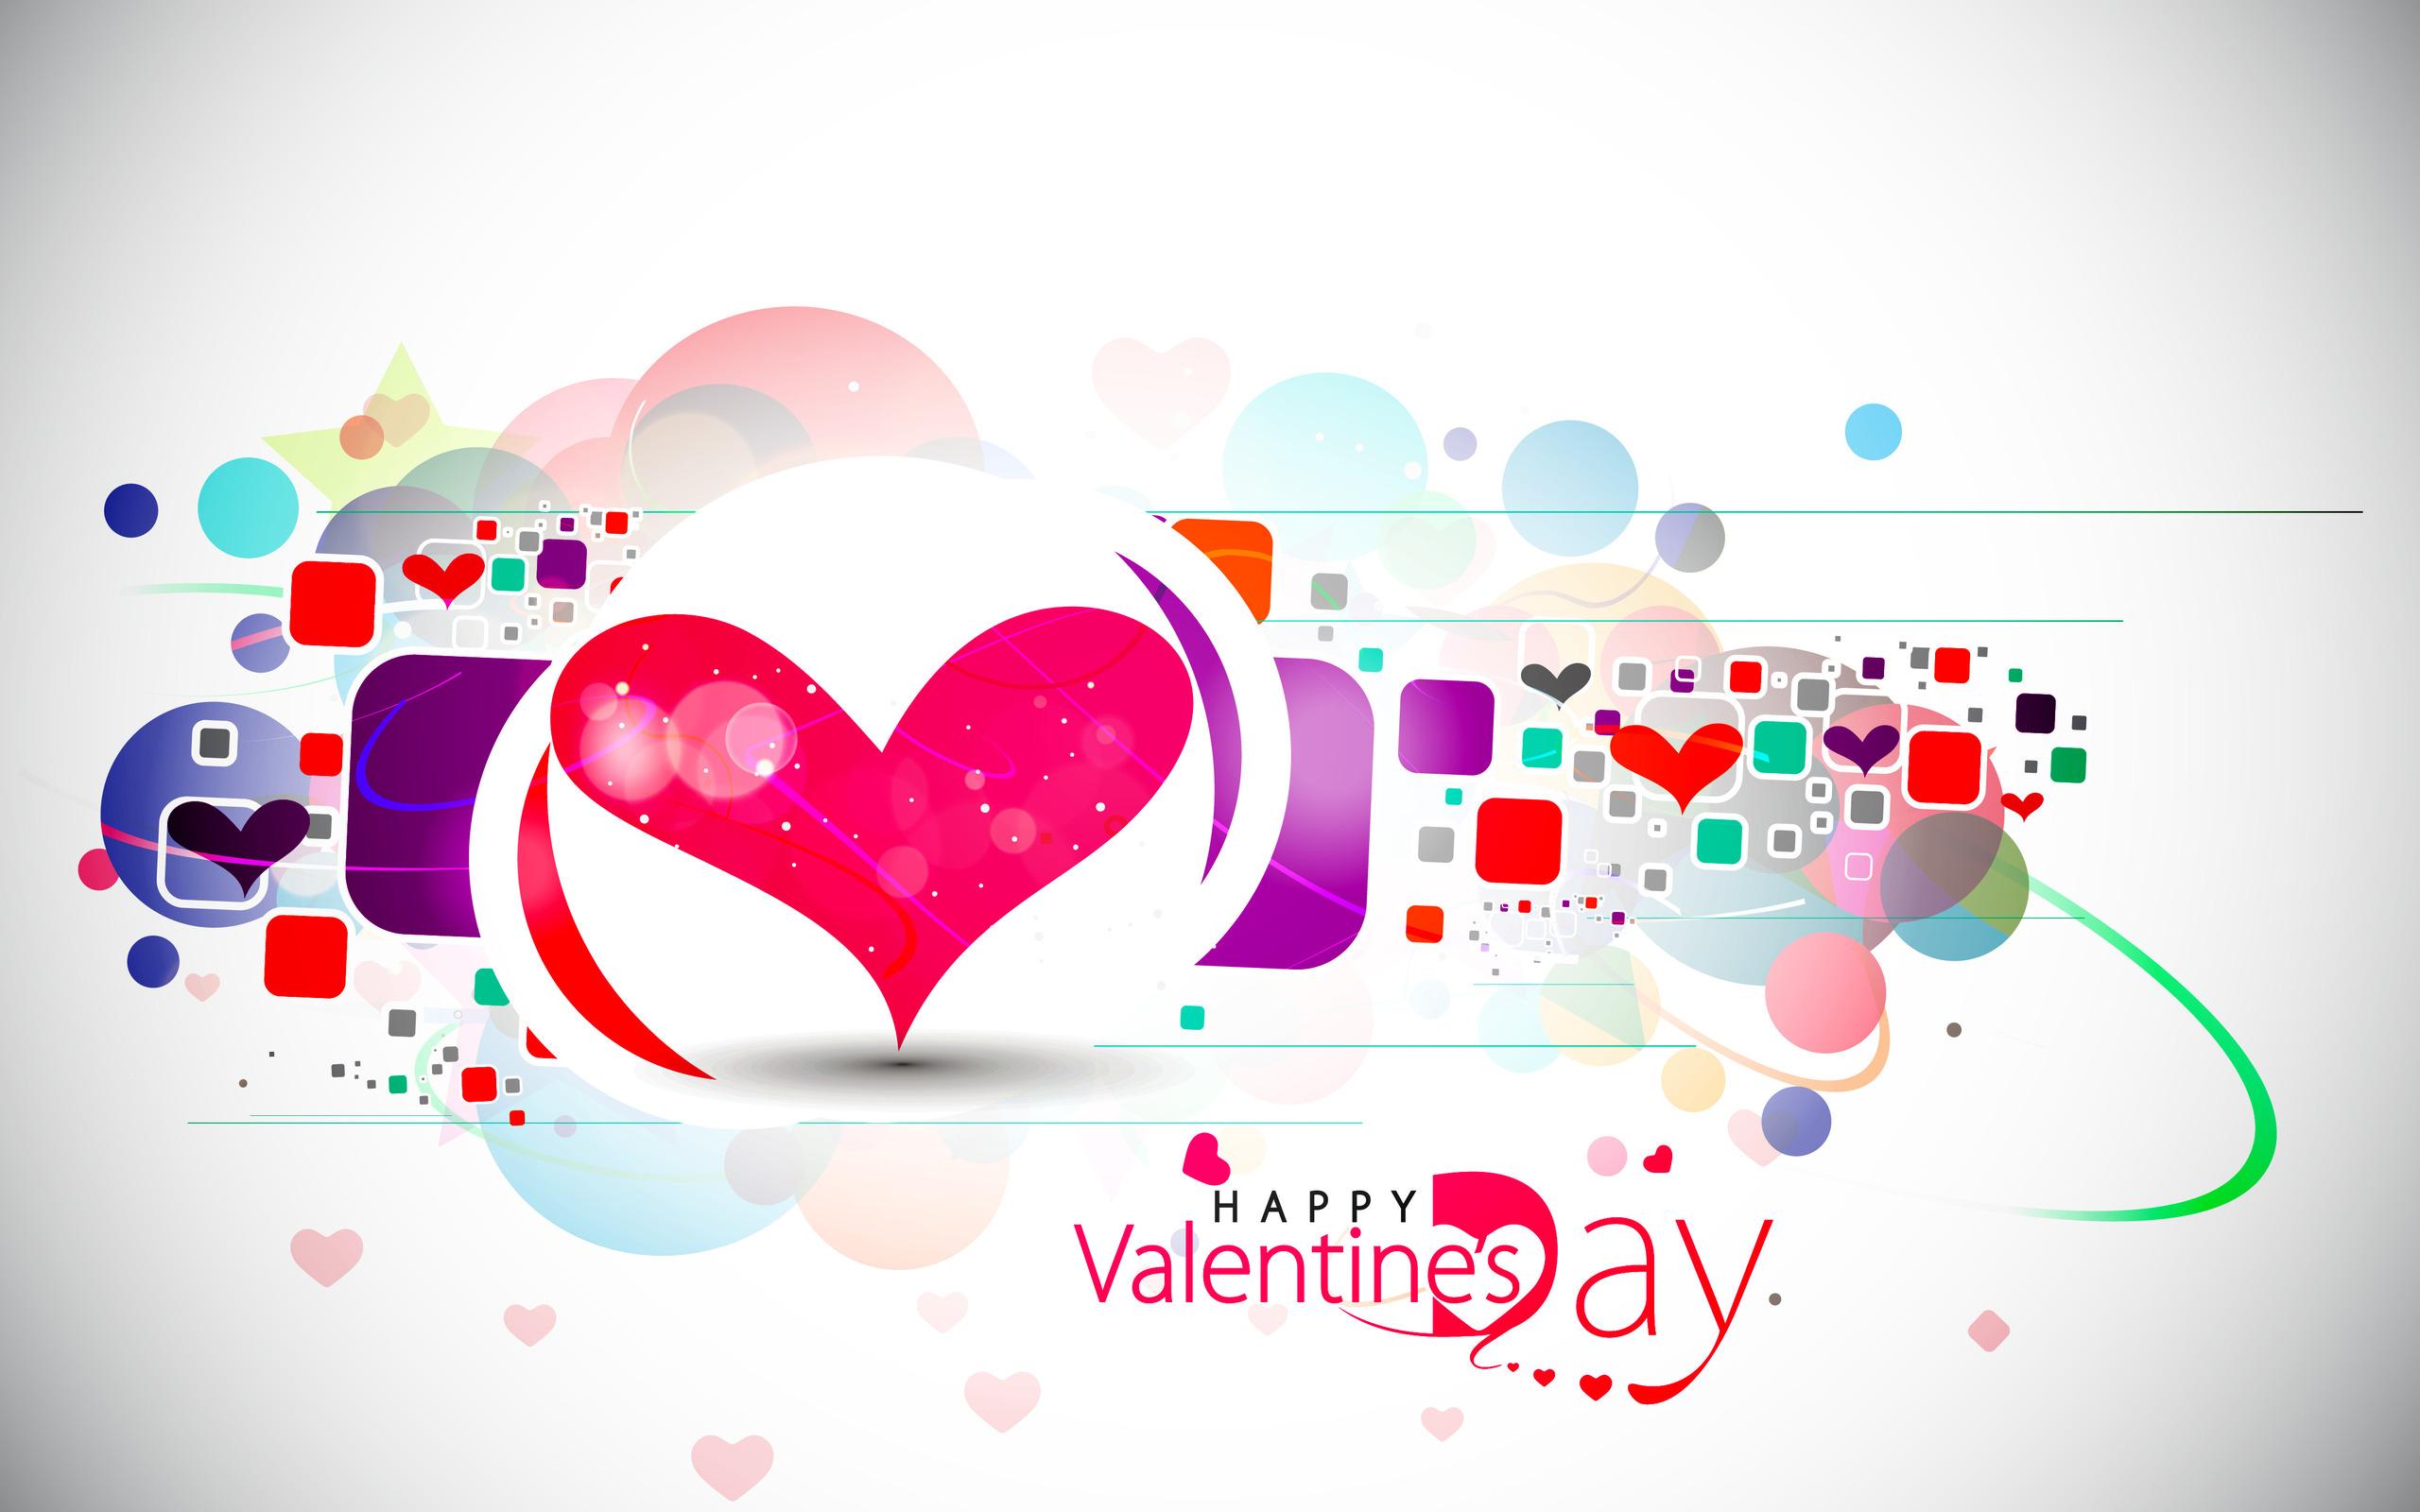 of Valentine's 4K wallpaper for your desktop or mobile screen